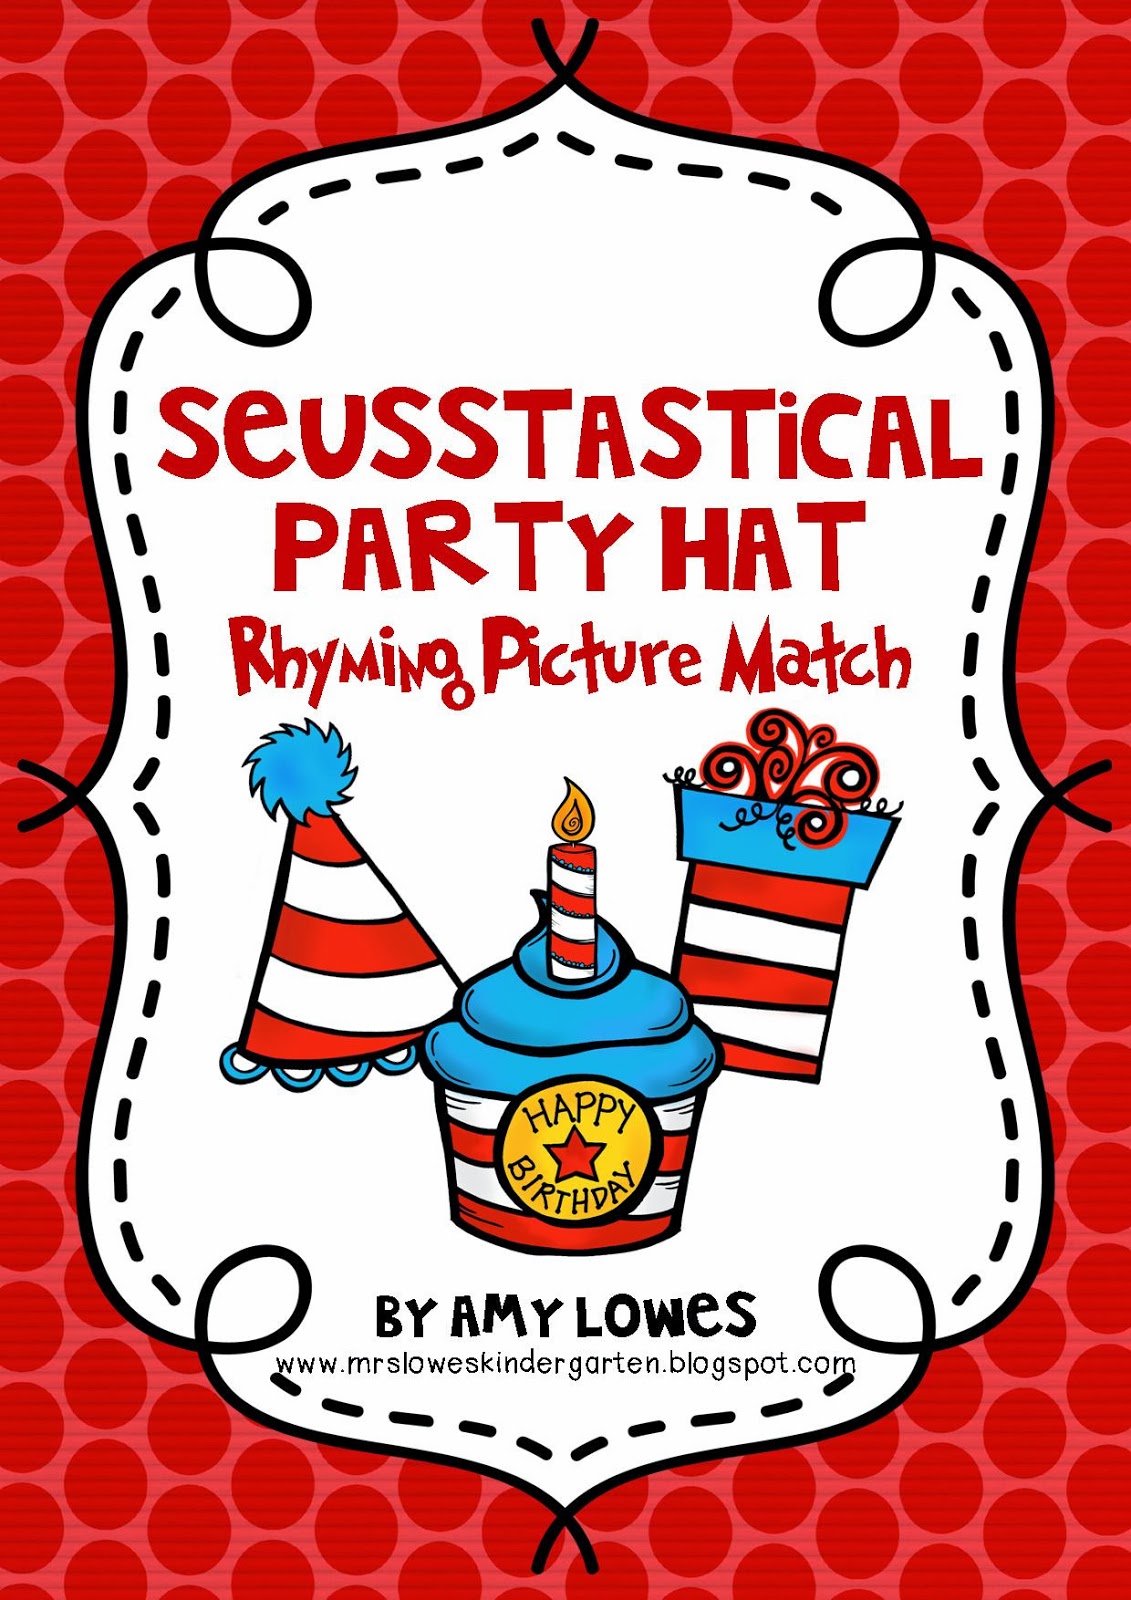 http://www.teacherspayteachers.com/Product/Seusstastical-Party-Hat-Rhyming-Picture-Match-1122875